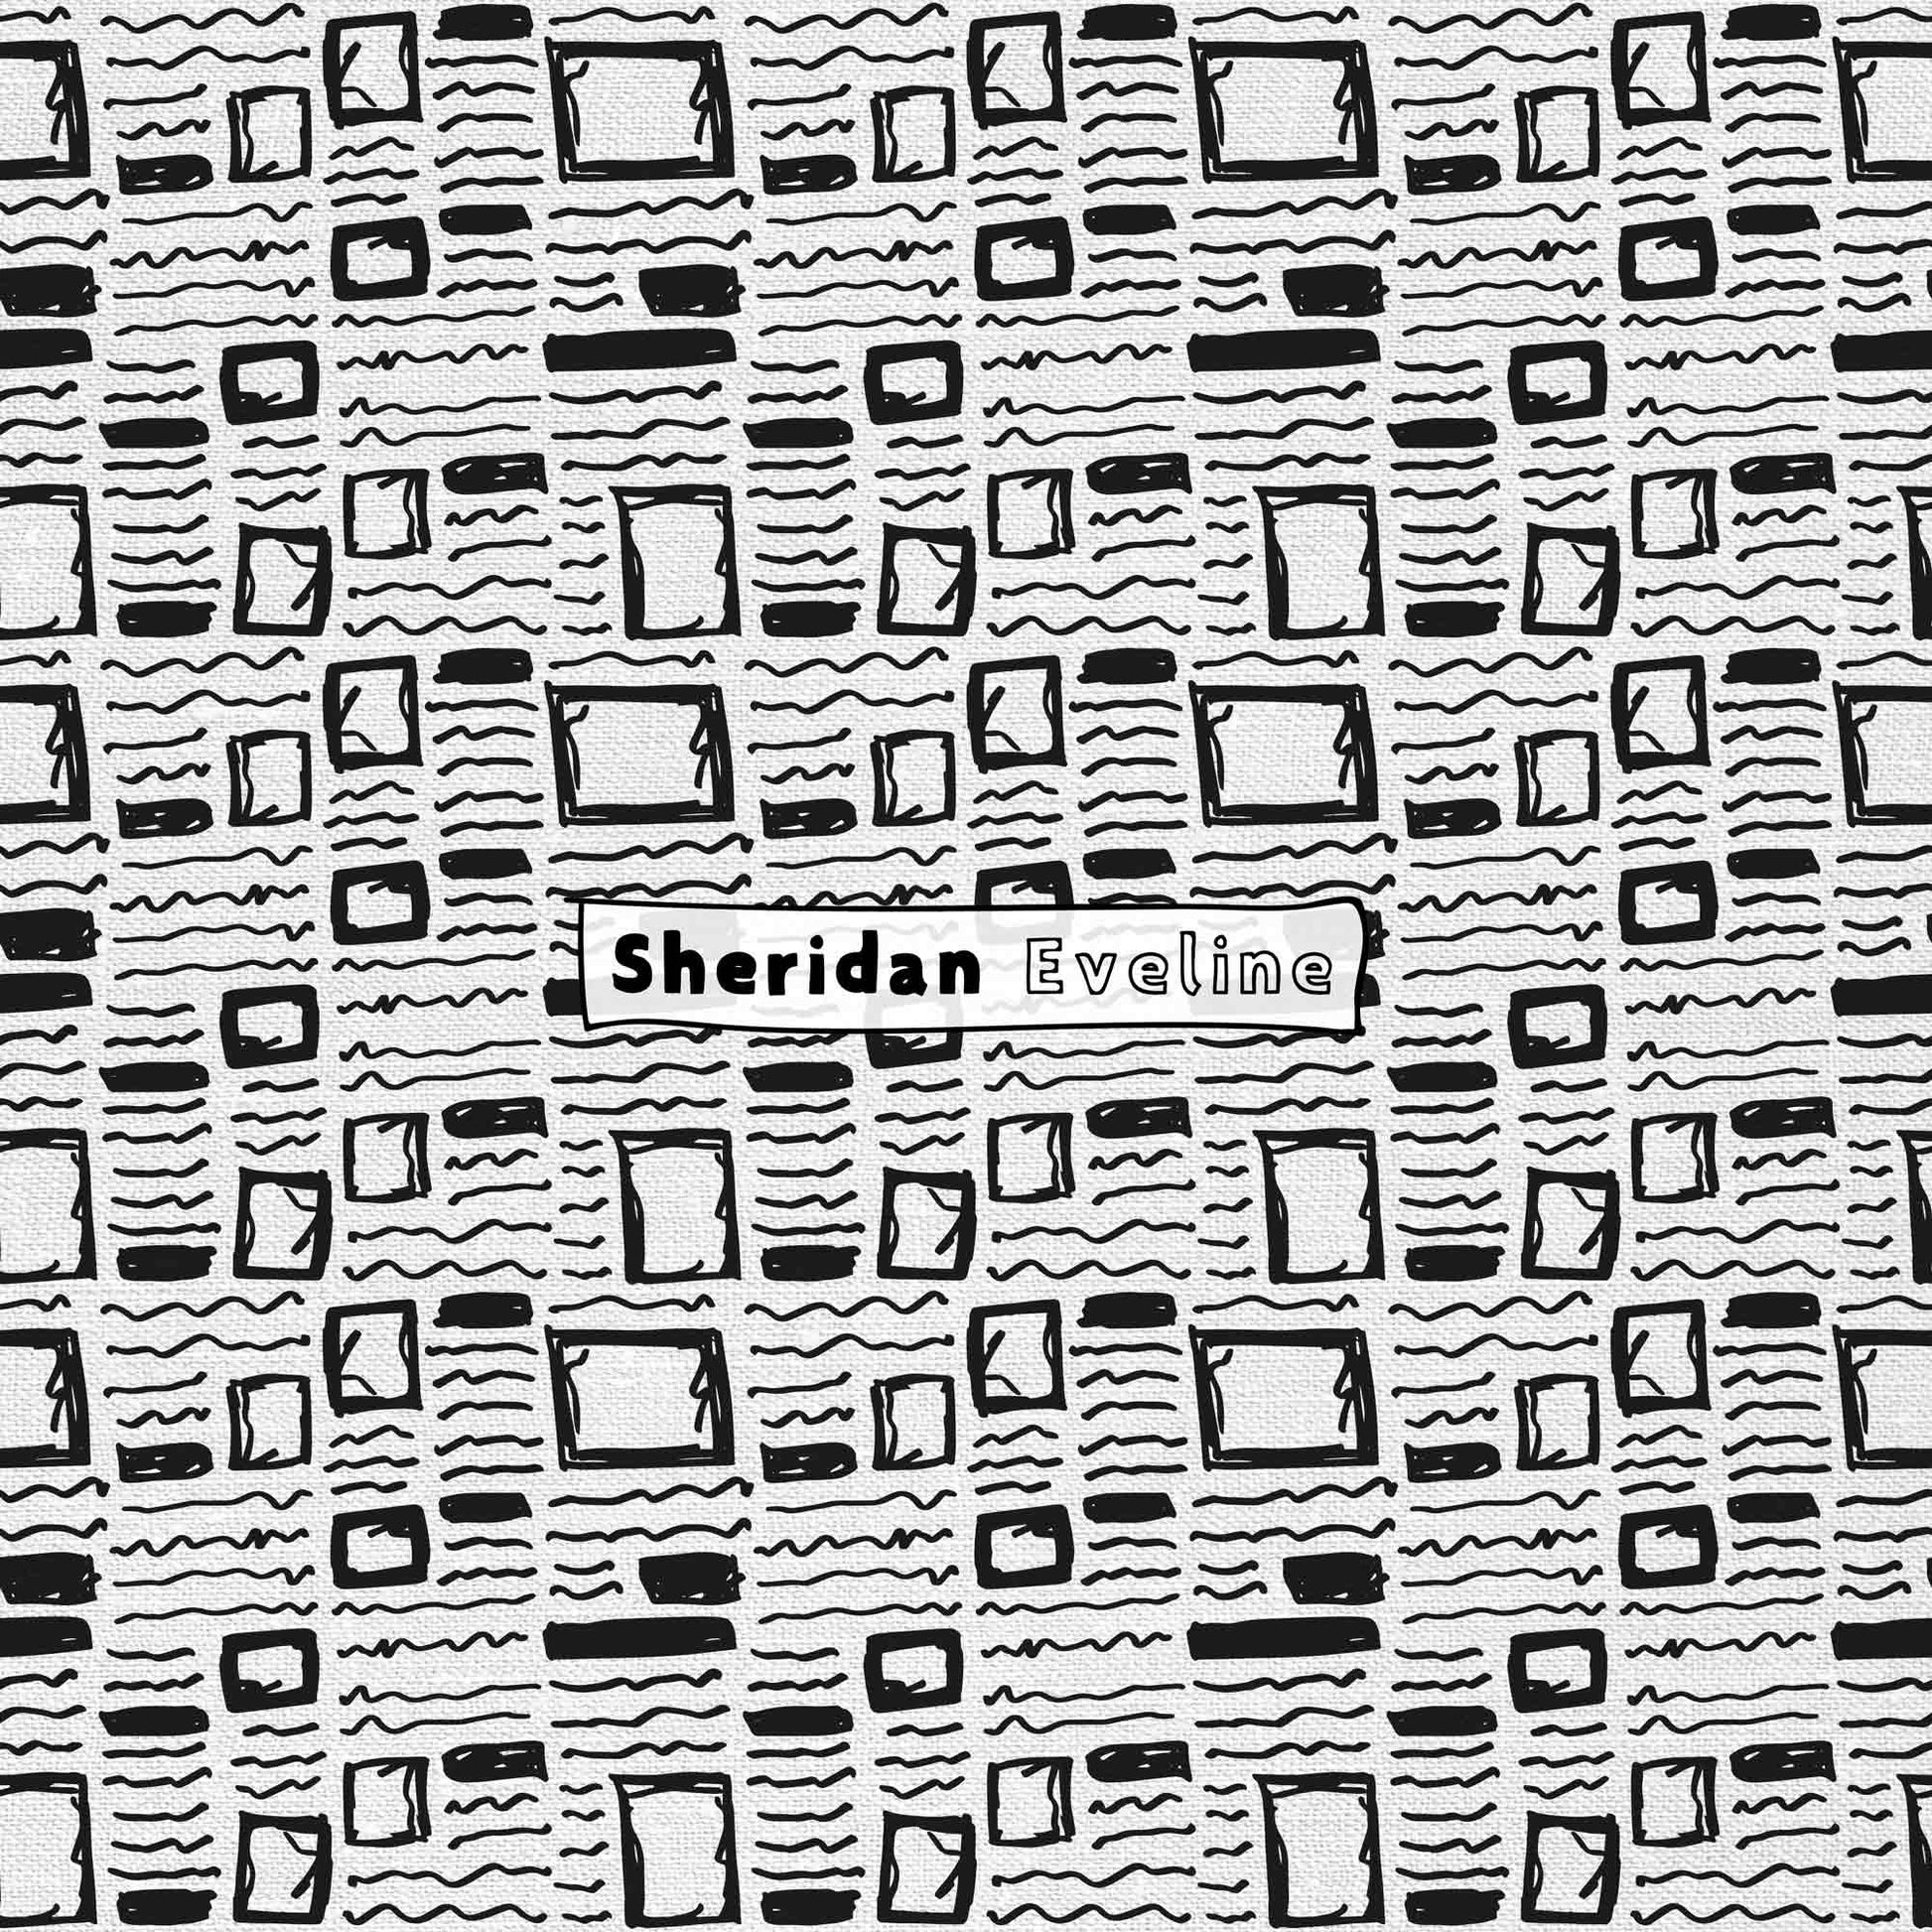 Sheridan Eveline - Brisbane Surface Pattern Designer - Black & White Pattern - Better Read